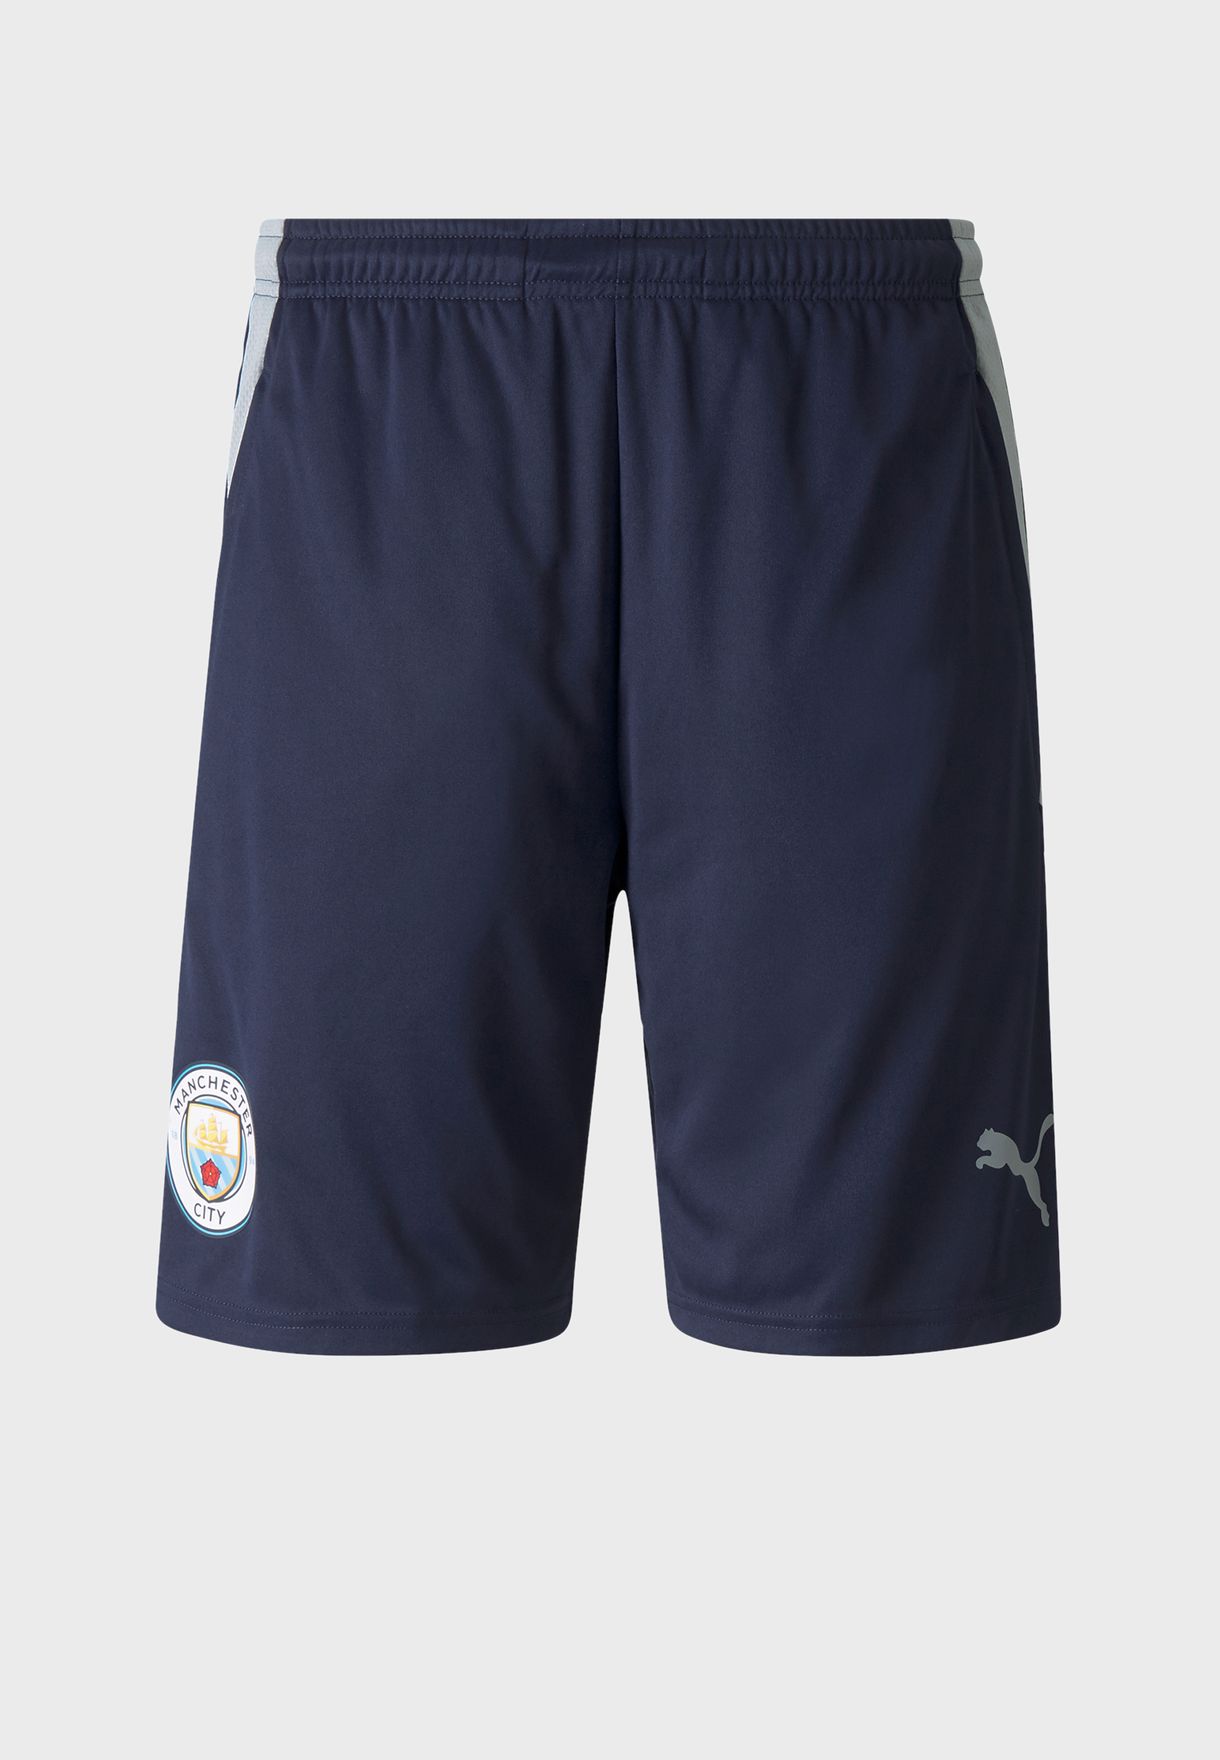 Manchester City Shorts